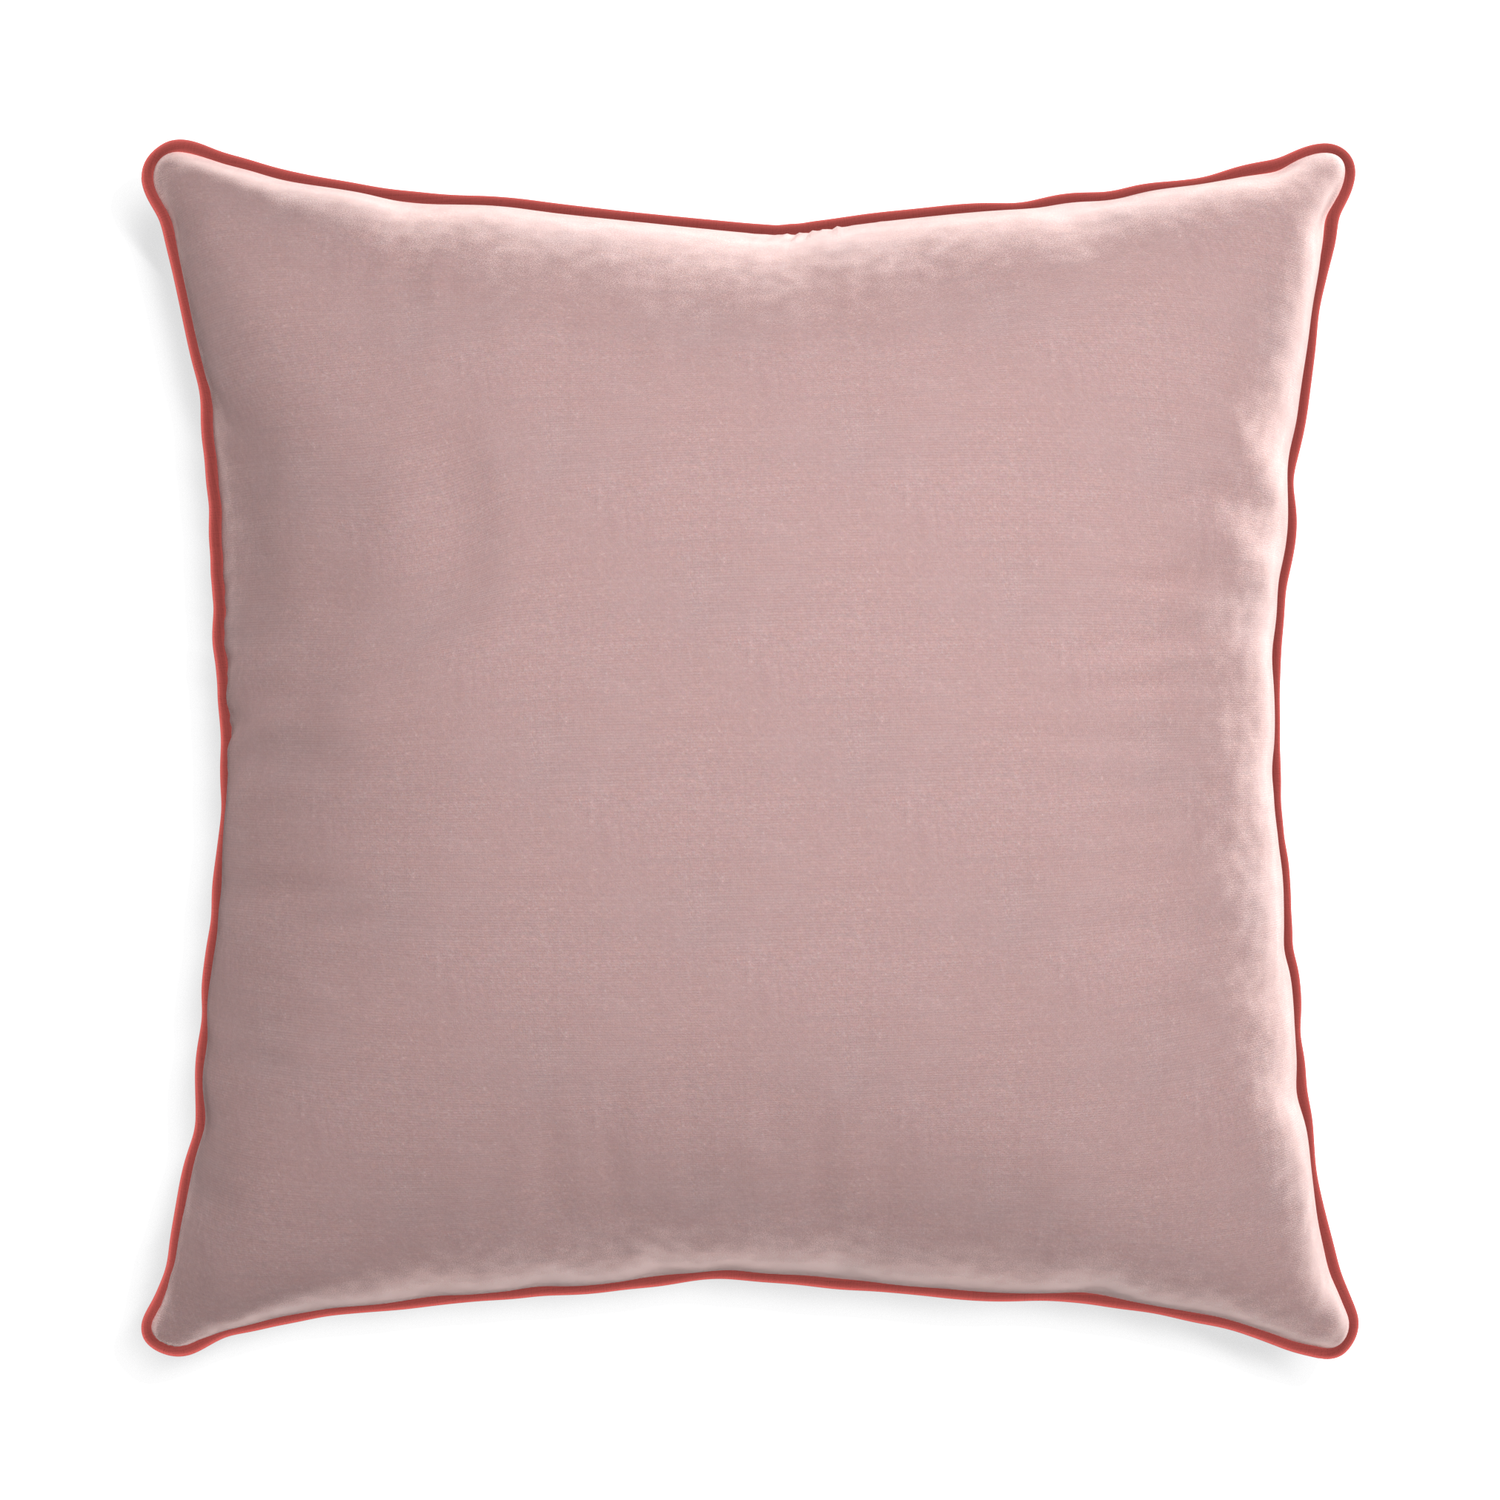 Euro-sham mauve velvet custom pillow with c piping on white background